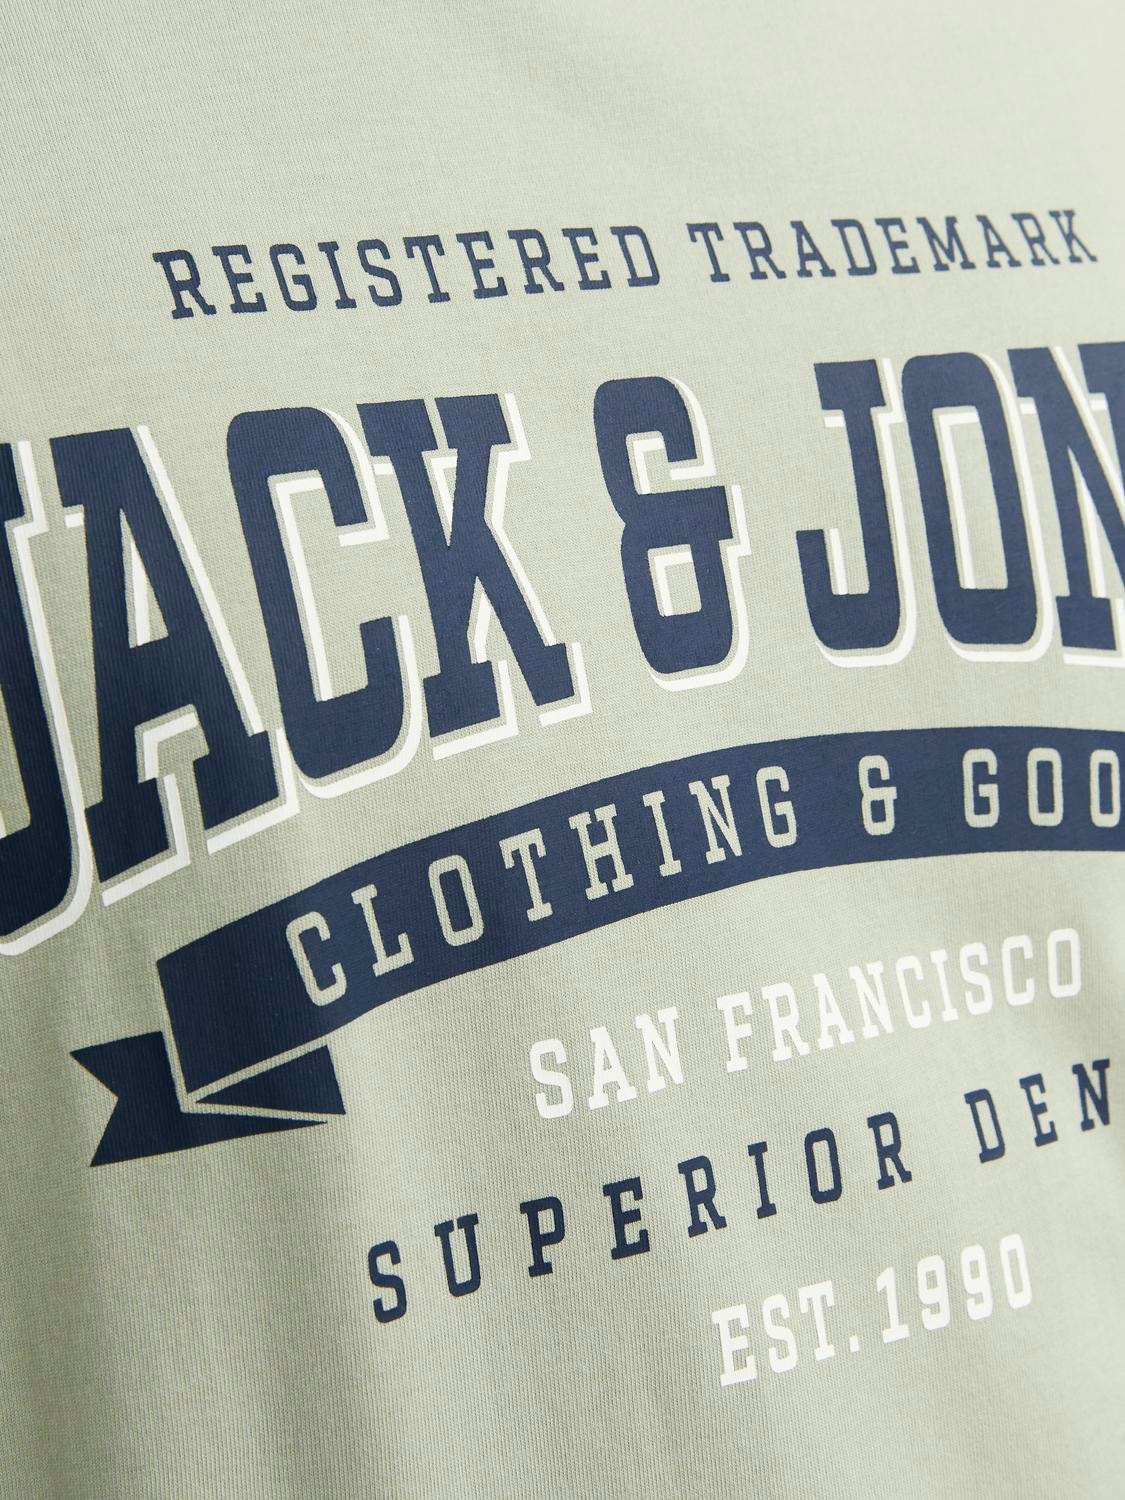 Jack & Jones T-shirt Logo Decote Redondo -Desert Sage - 12246690